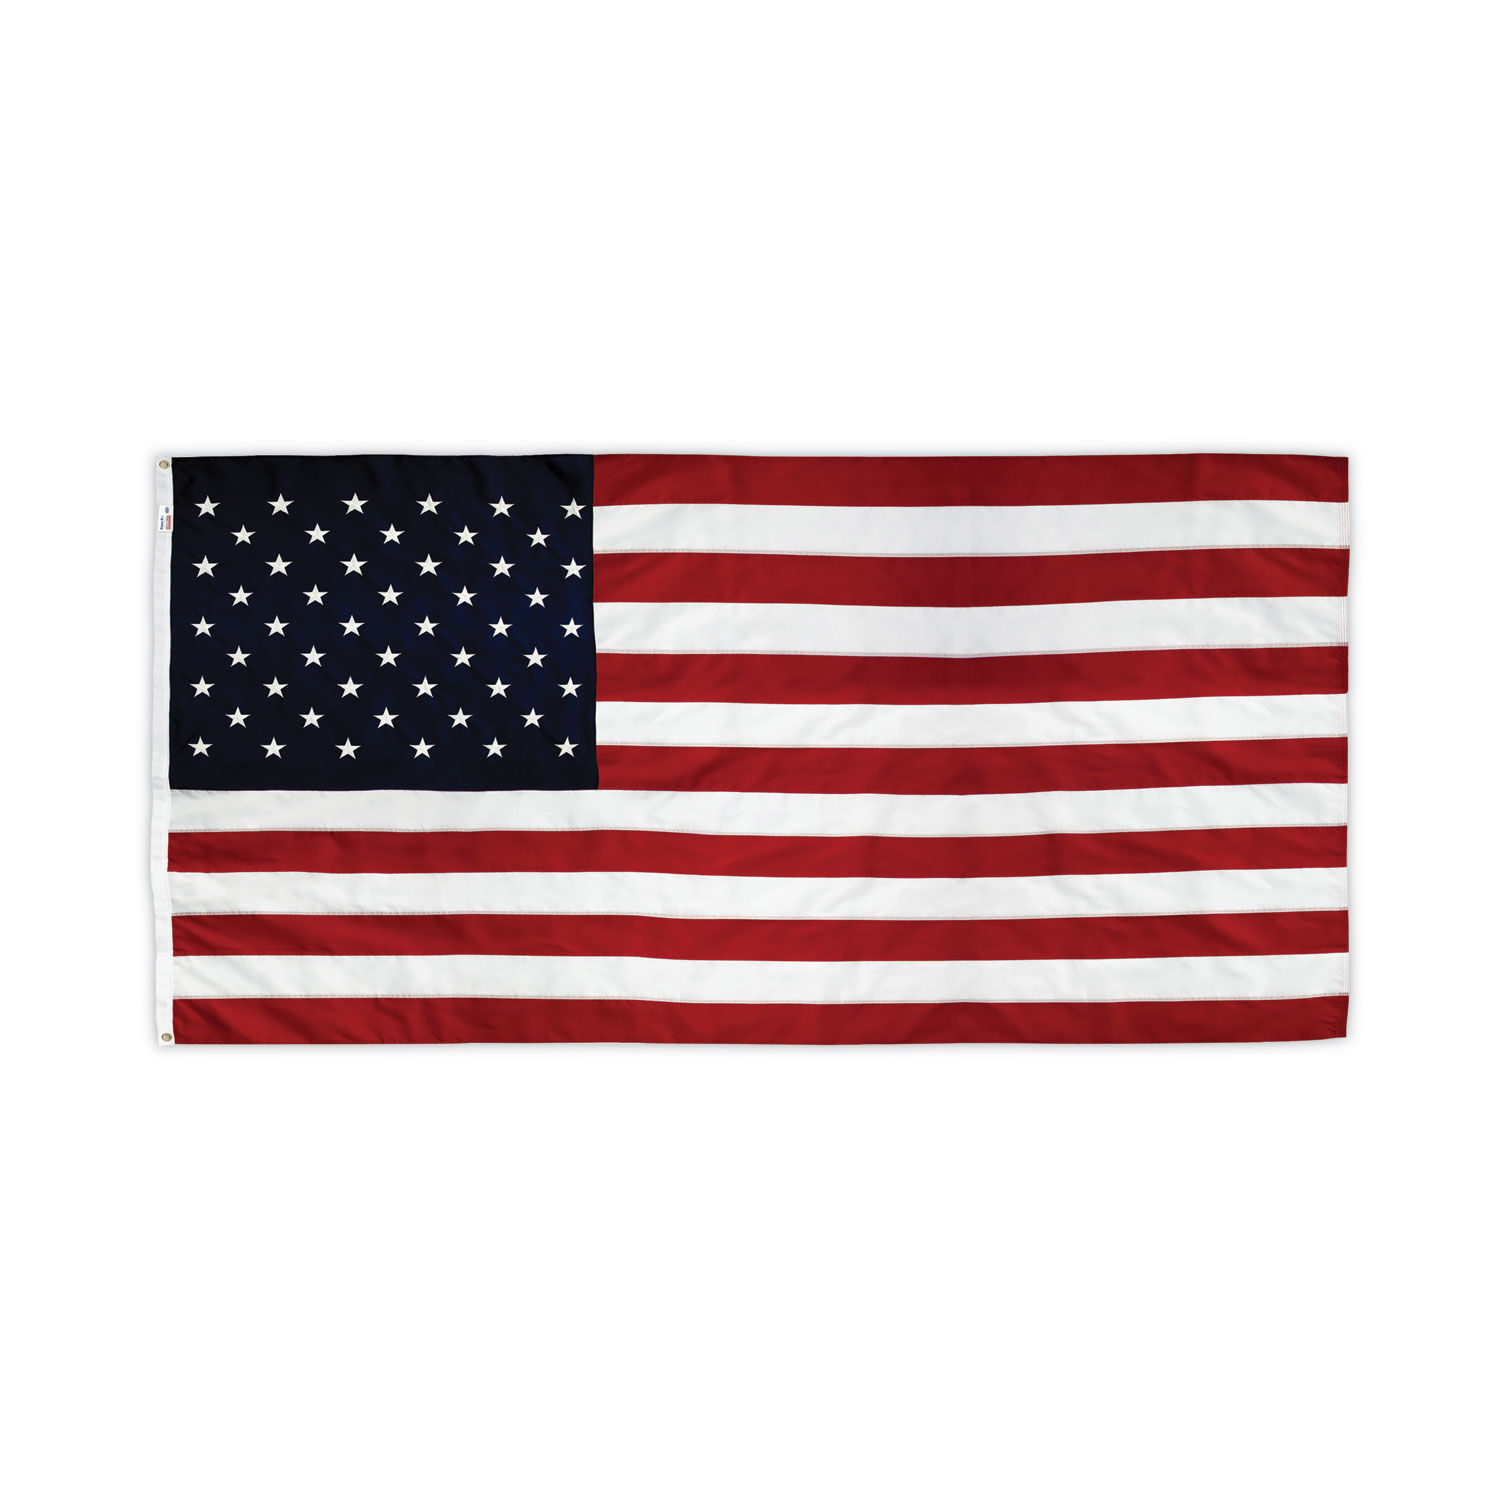 All-Weather Outdoor U.S. Flag 96" x 60", Heavyweight Nylon